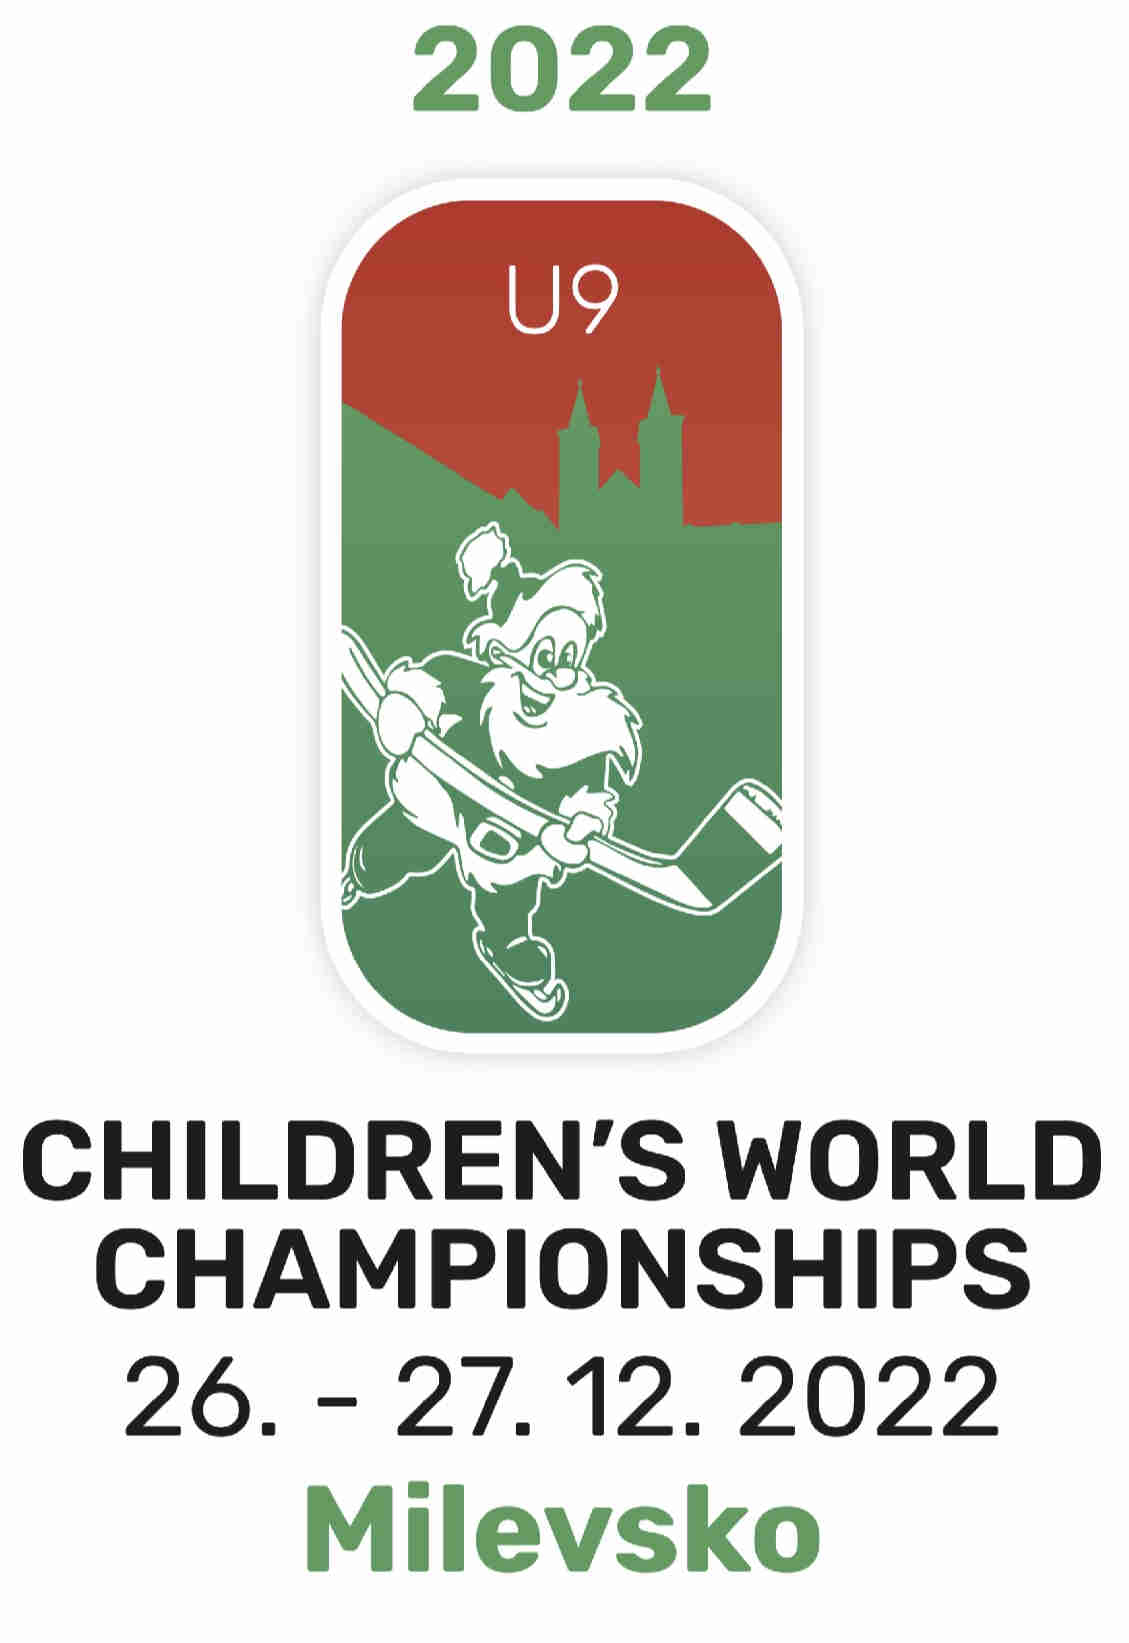 CHILDRENS WORLD CHAMPIONSHIPS